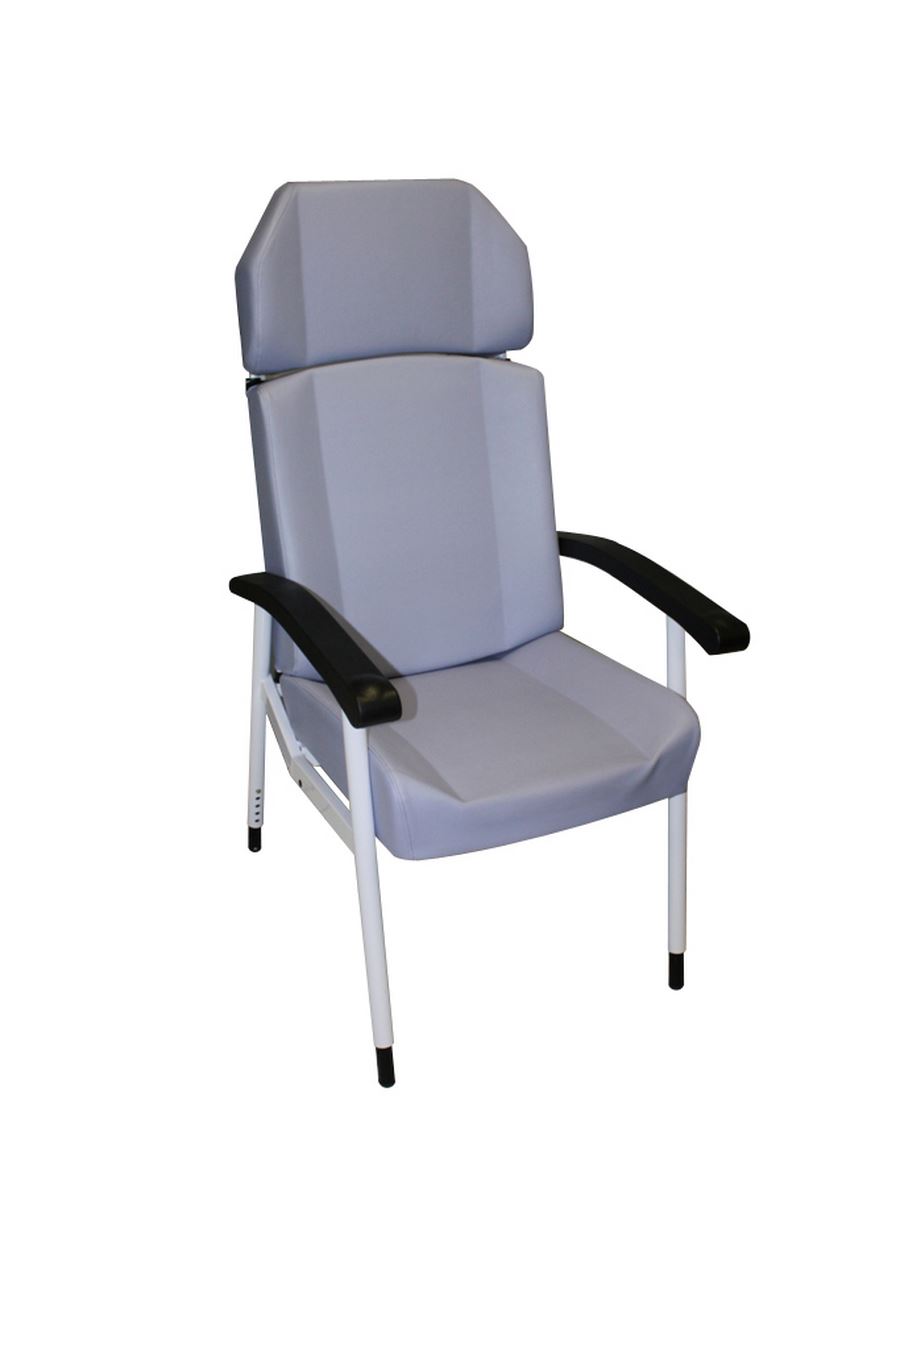 Les fauteuils de repos Quiego 800 Parapharm